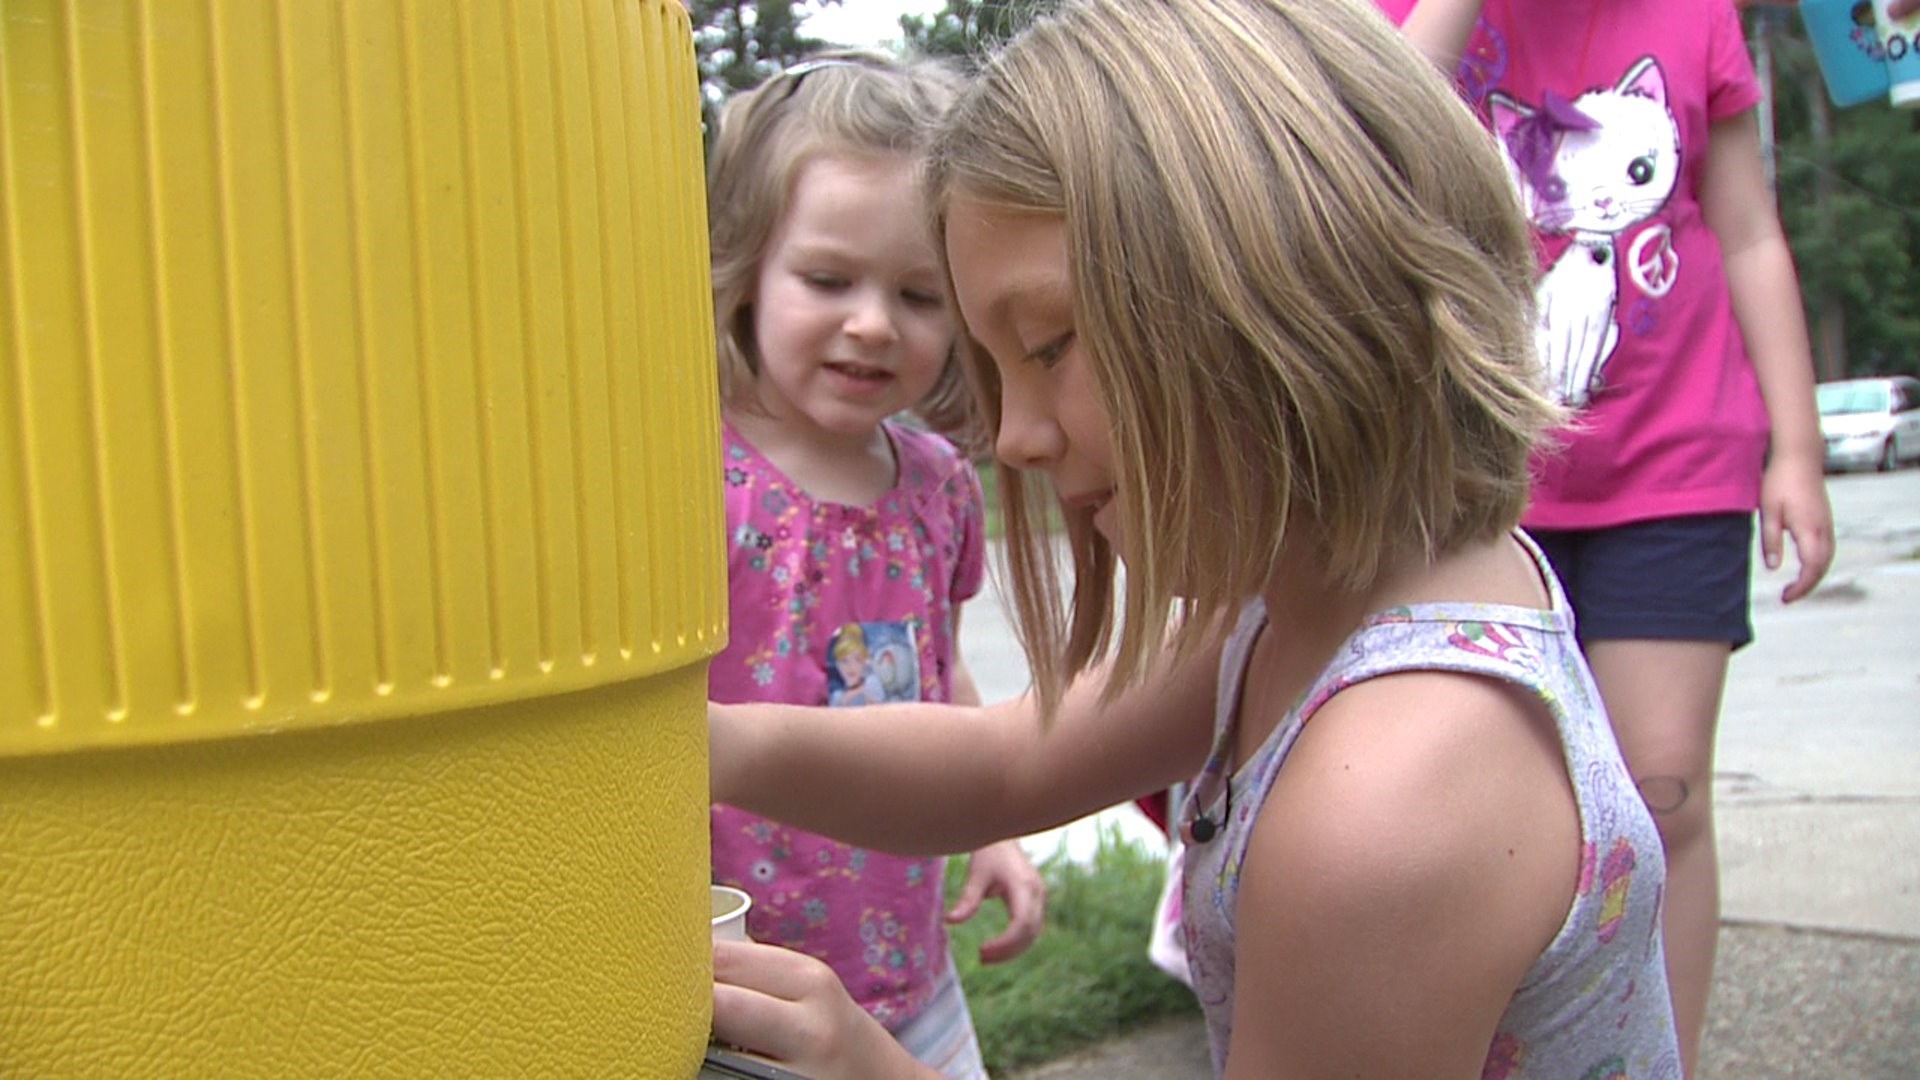 Moline kids run lemonade stand to raise money for their favorite library